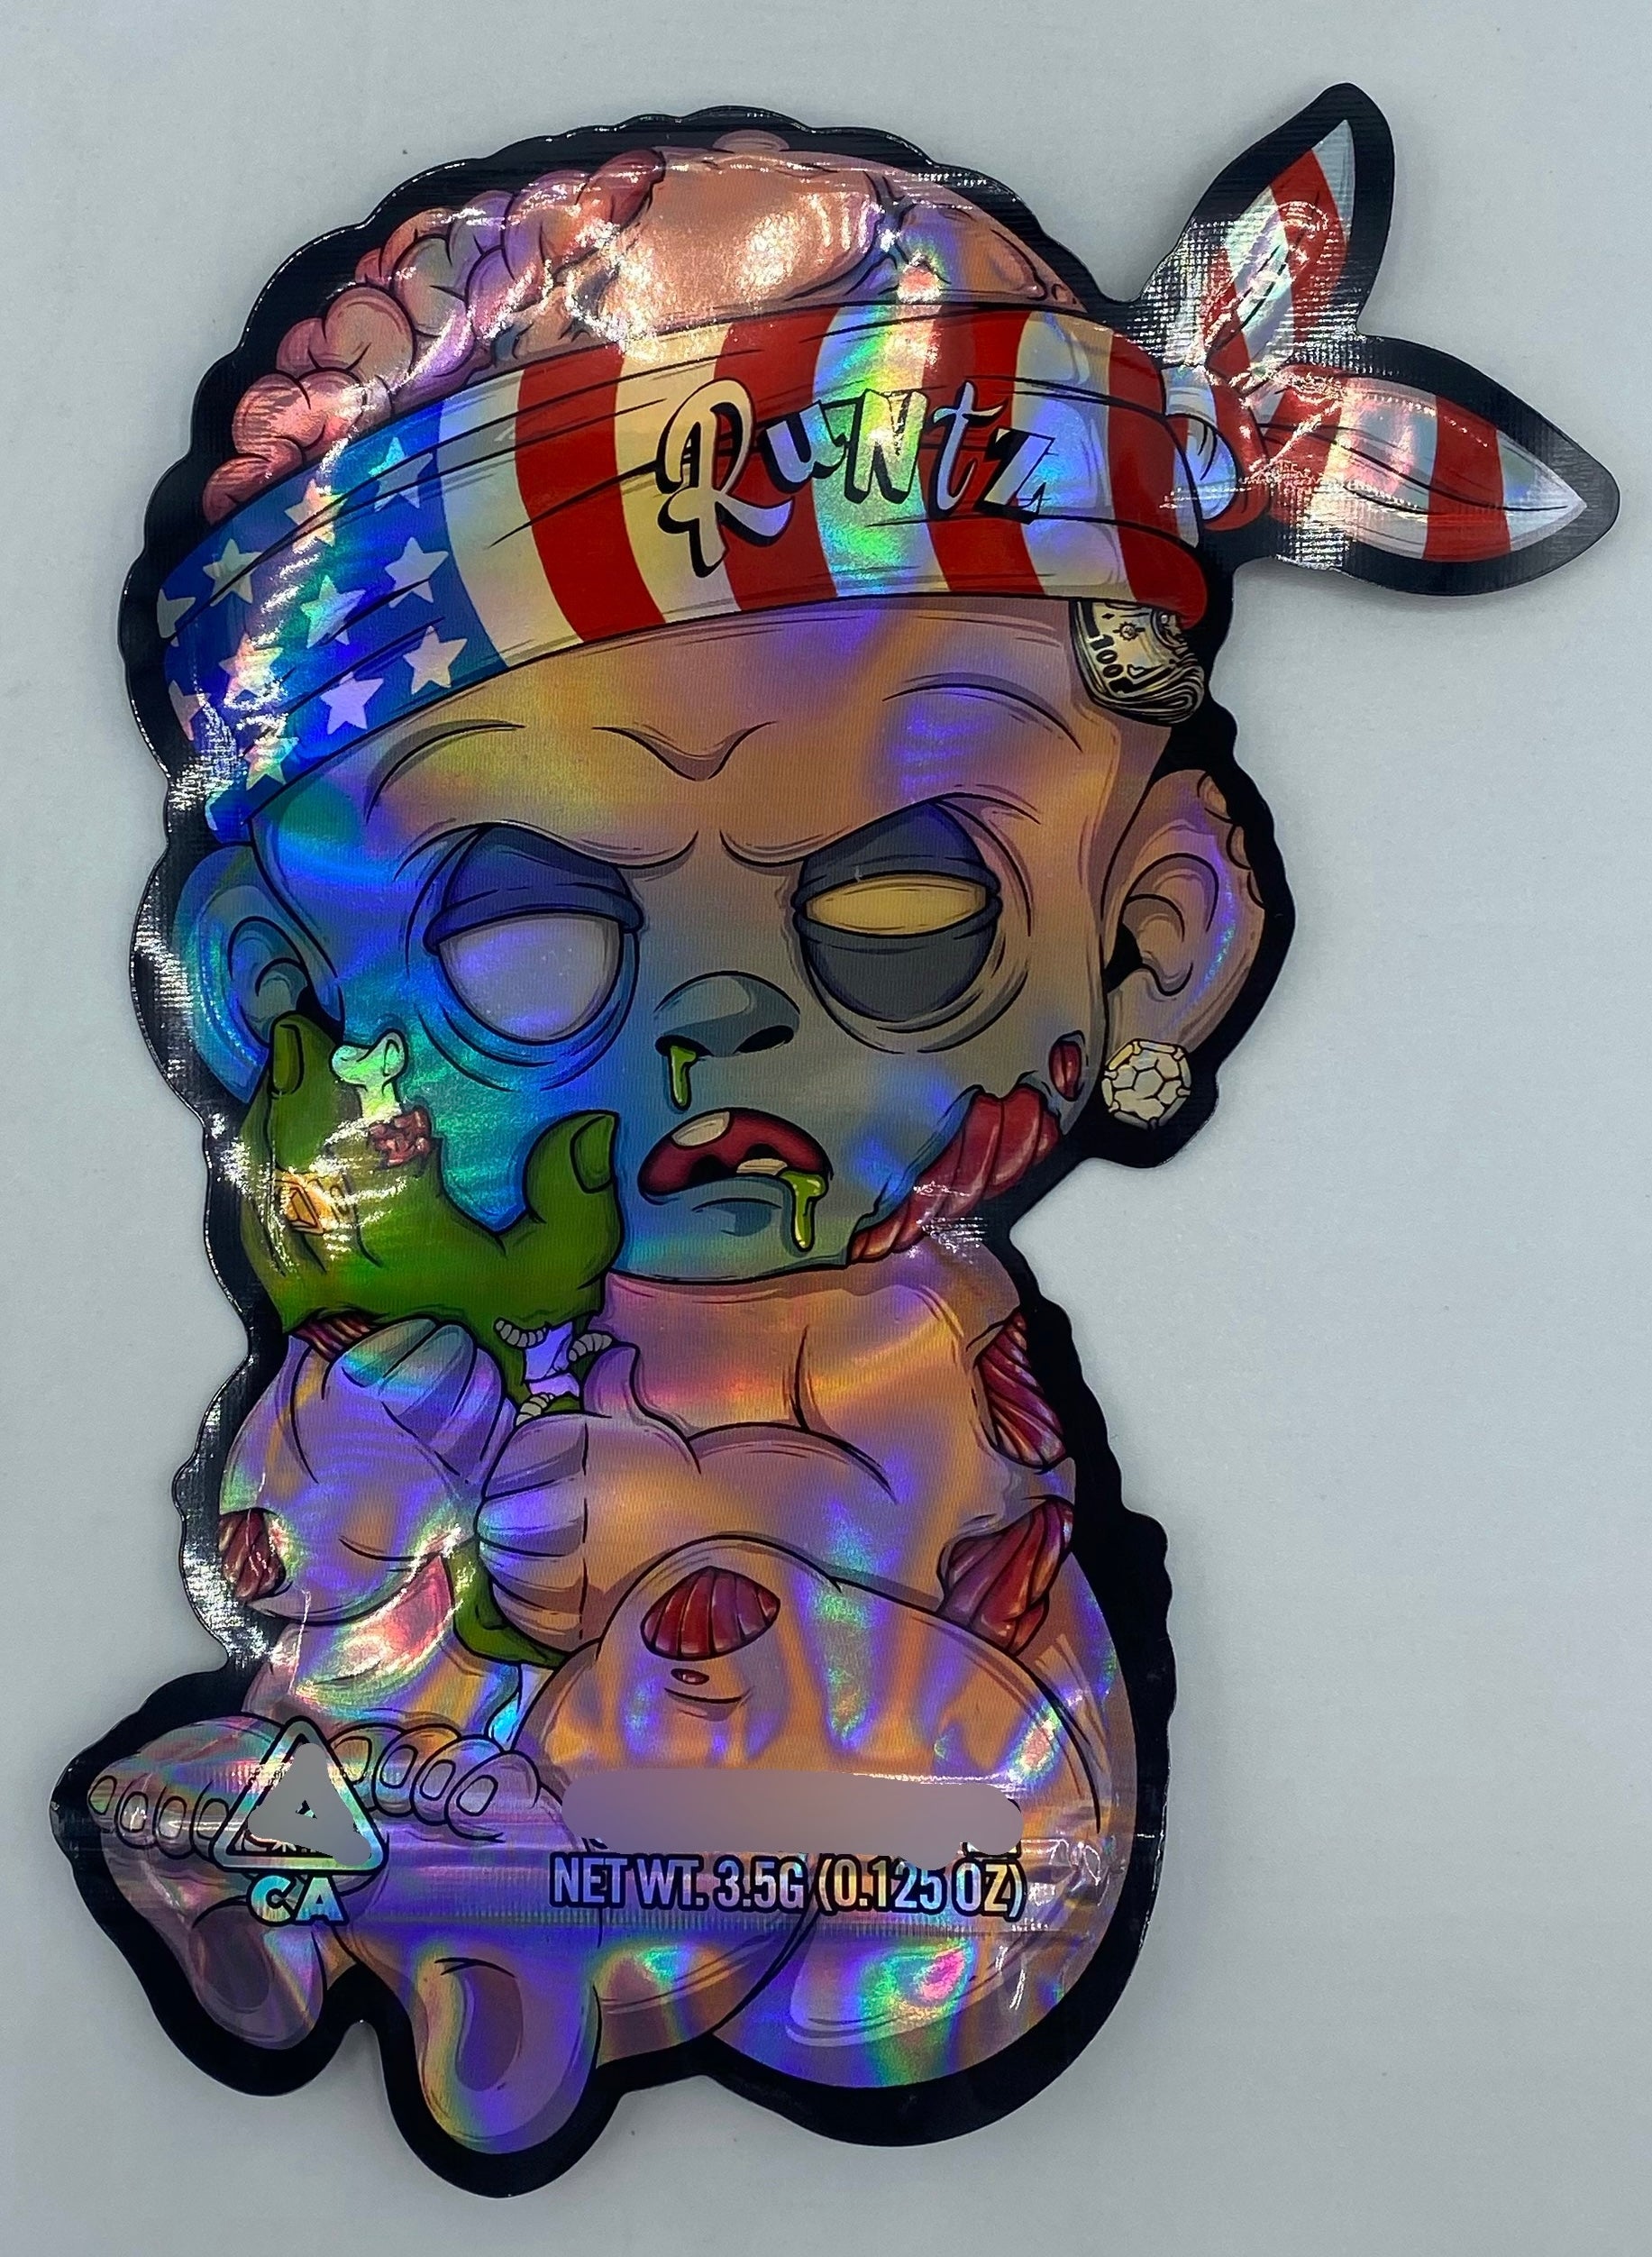 3D Runtz (American)High Tolerance I can’t Feel My Face 3.5g Mylar Bags